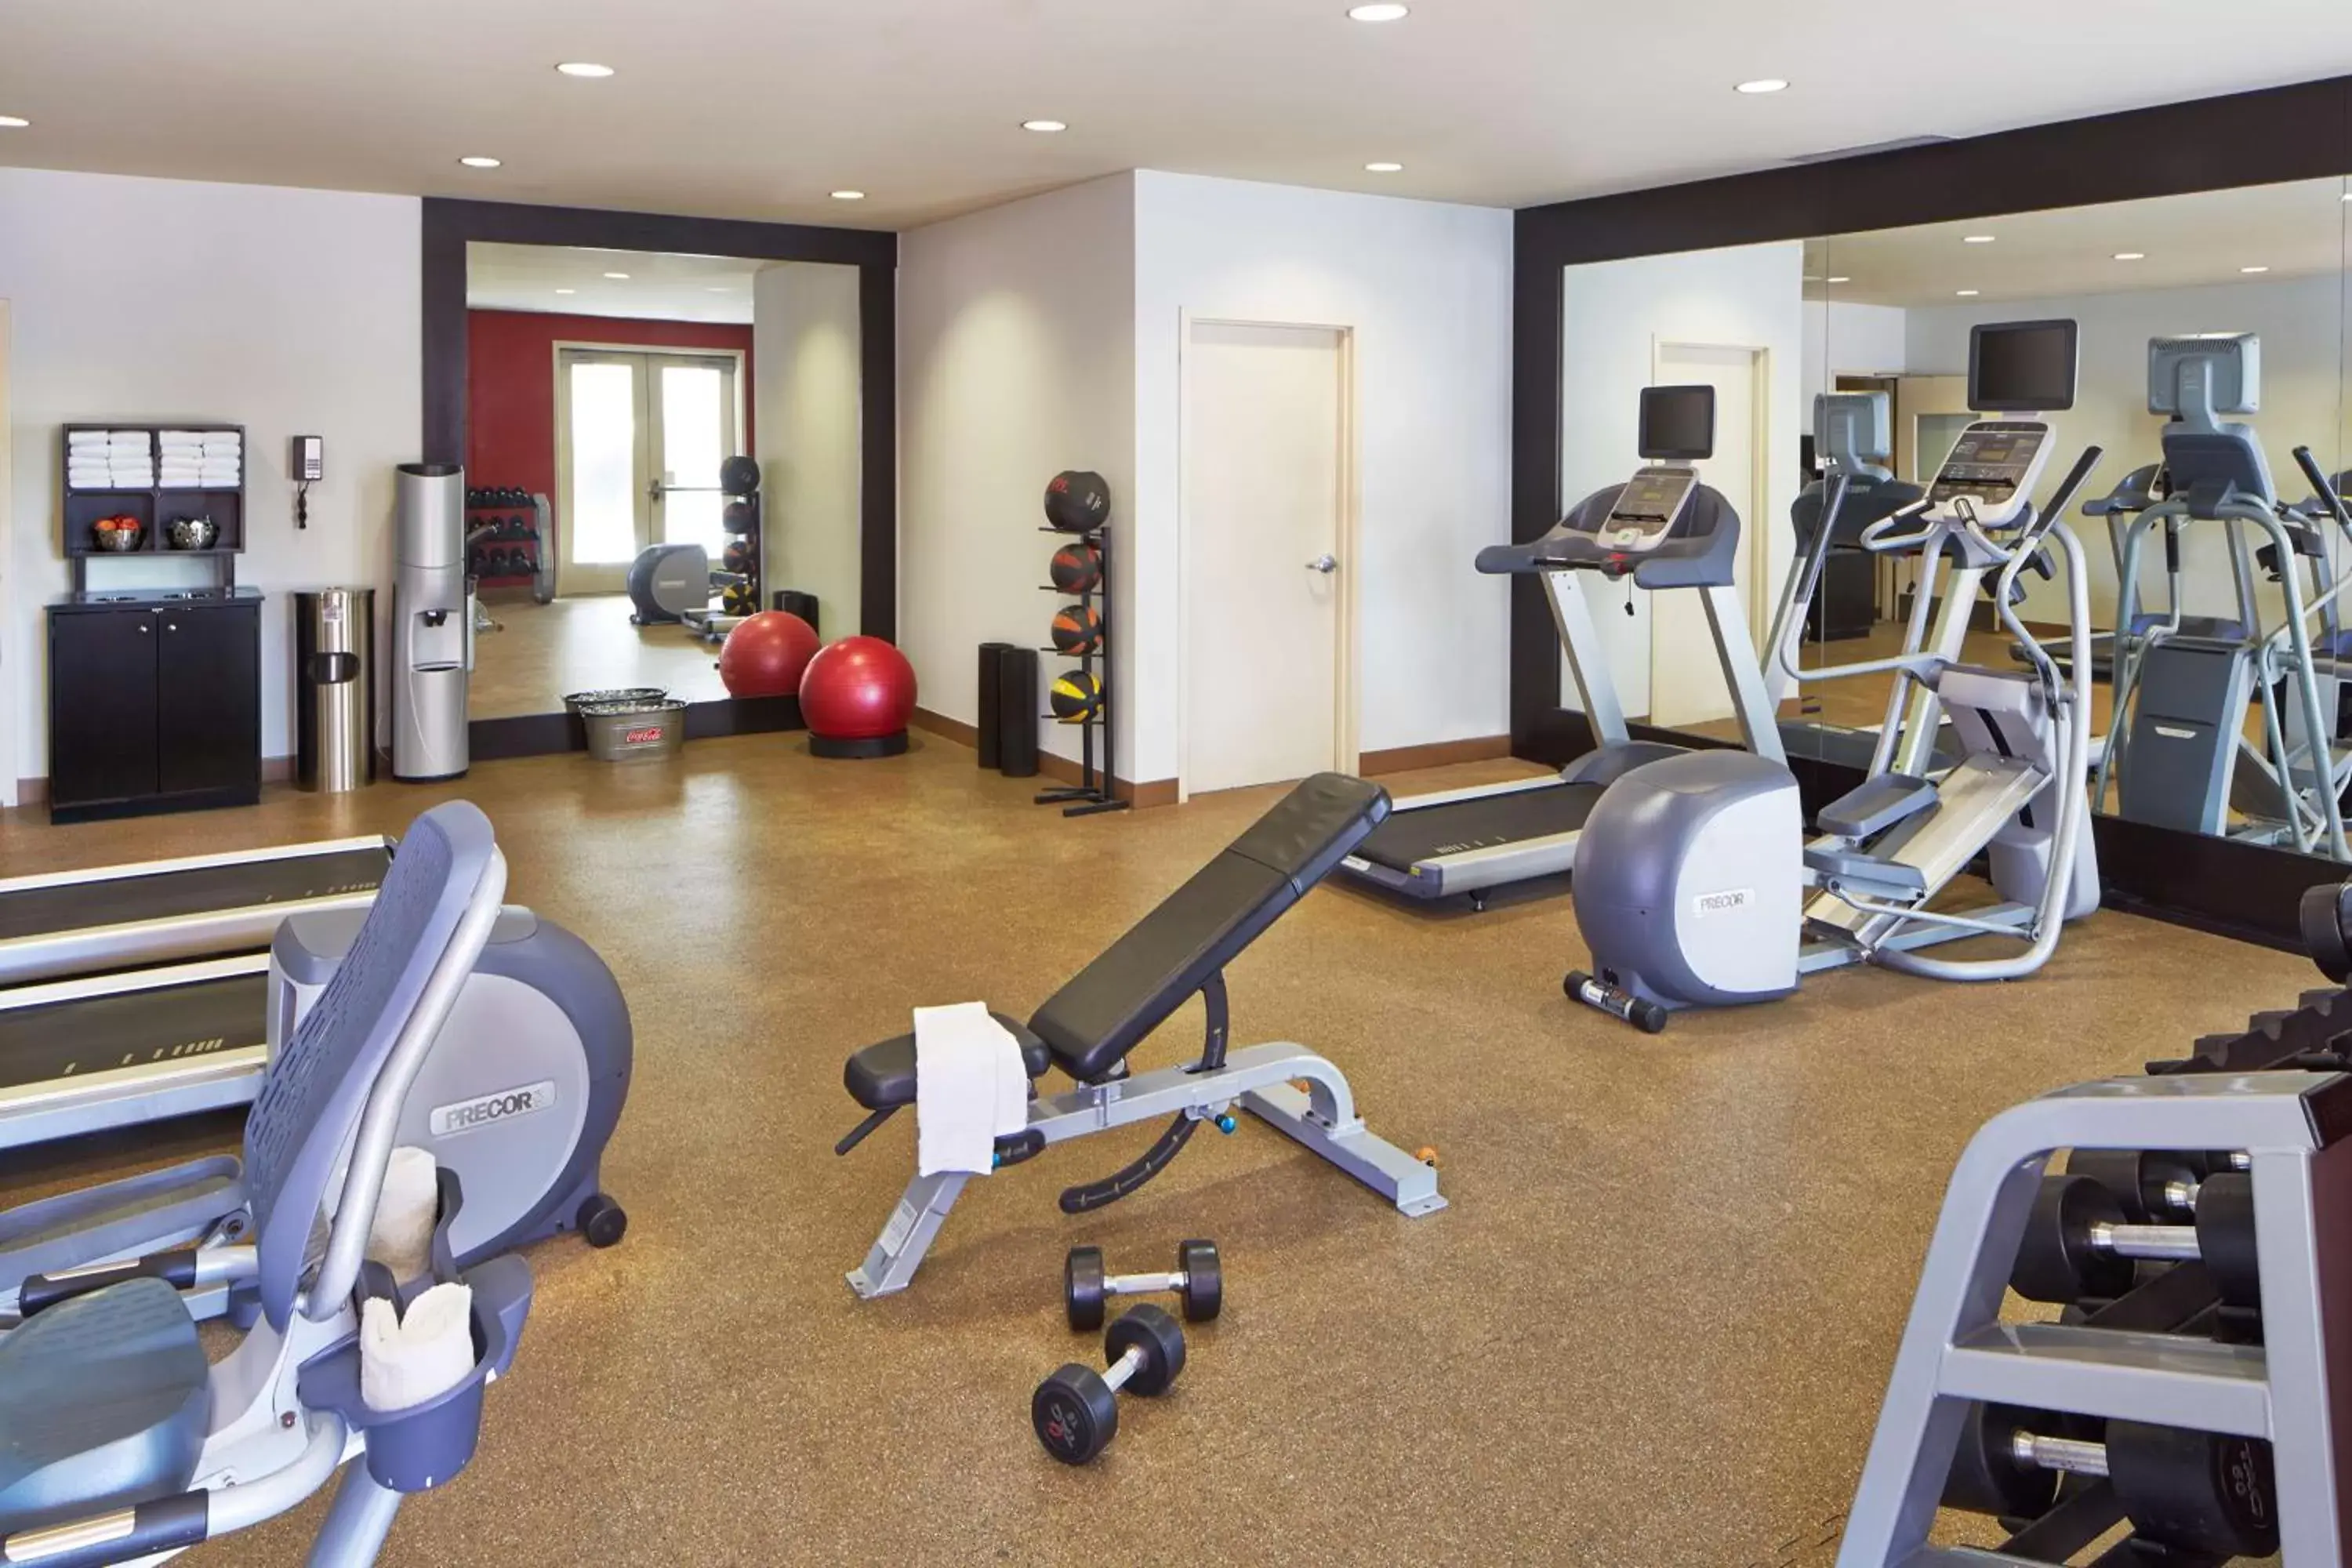 Fitness centre/facilities, Fitness Center/Facilities in Hilton Garden Inn Scottsdale Old Town